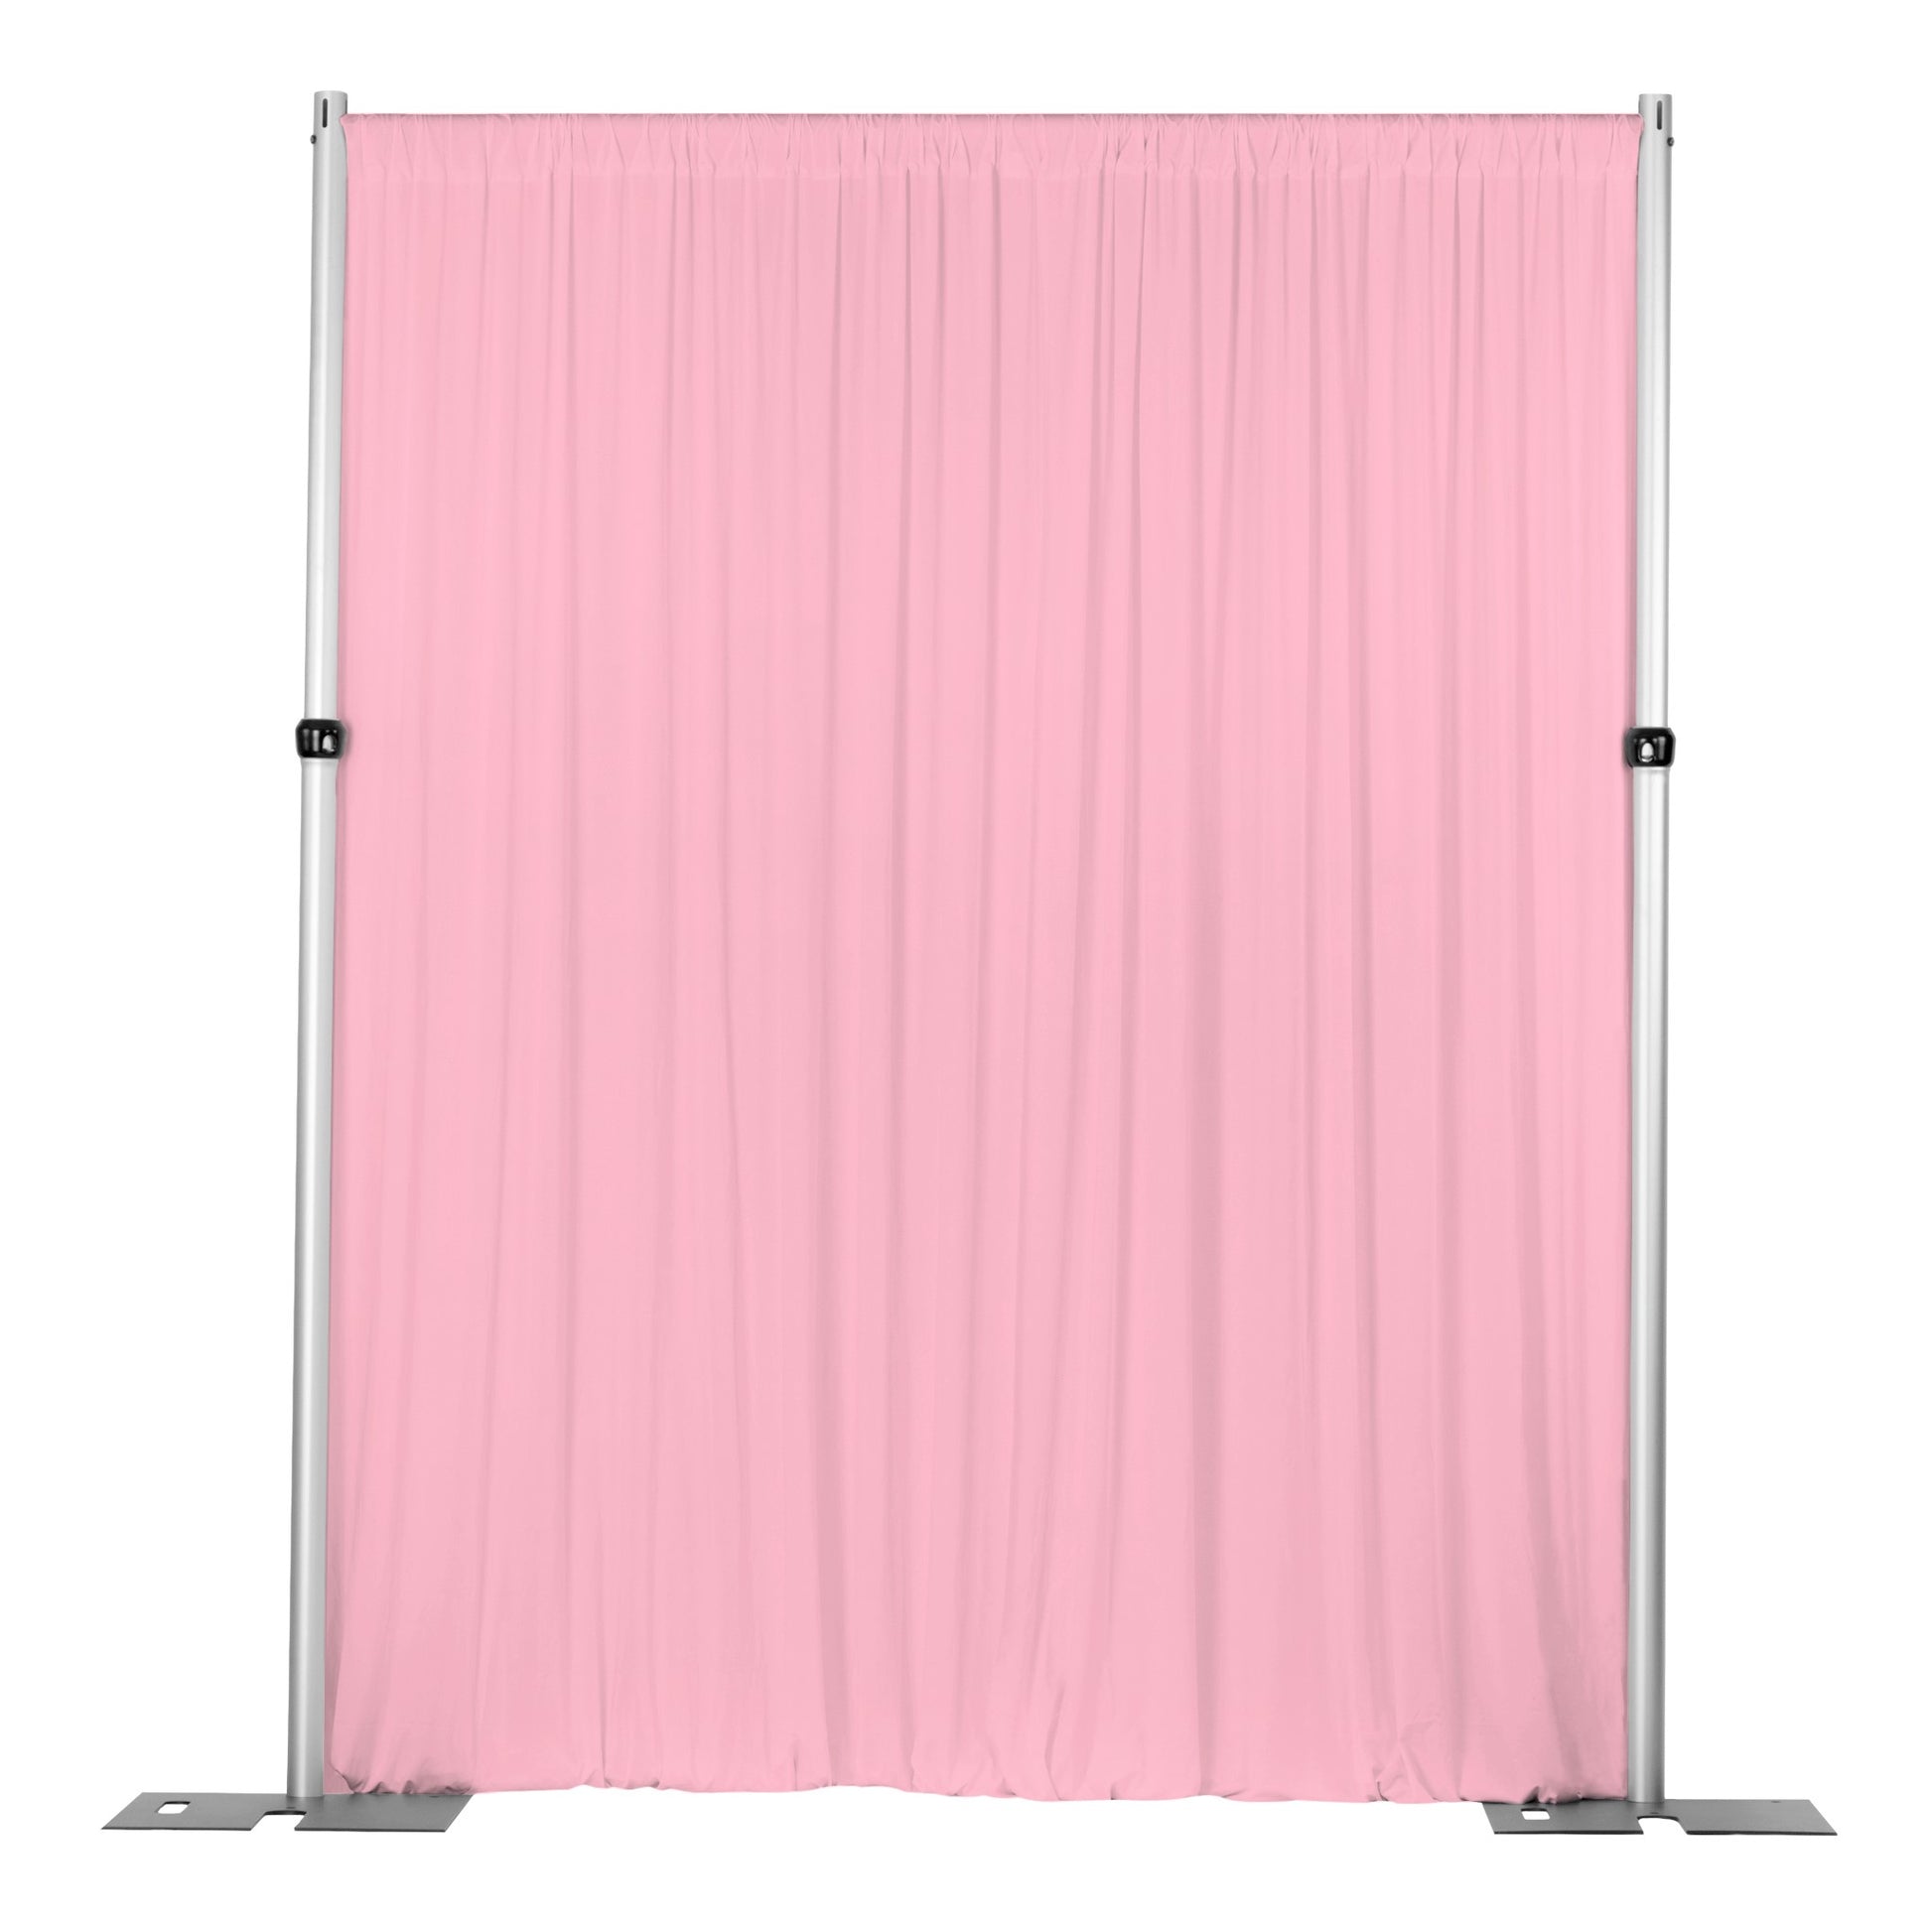 Spandex 4-way Stretch Backdrop Drape Curtain 16ft H x 60" W - Pink